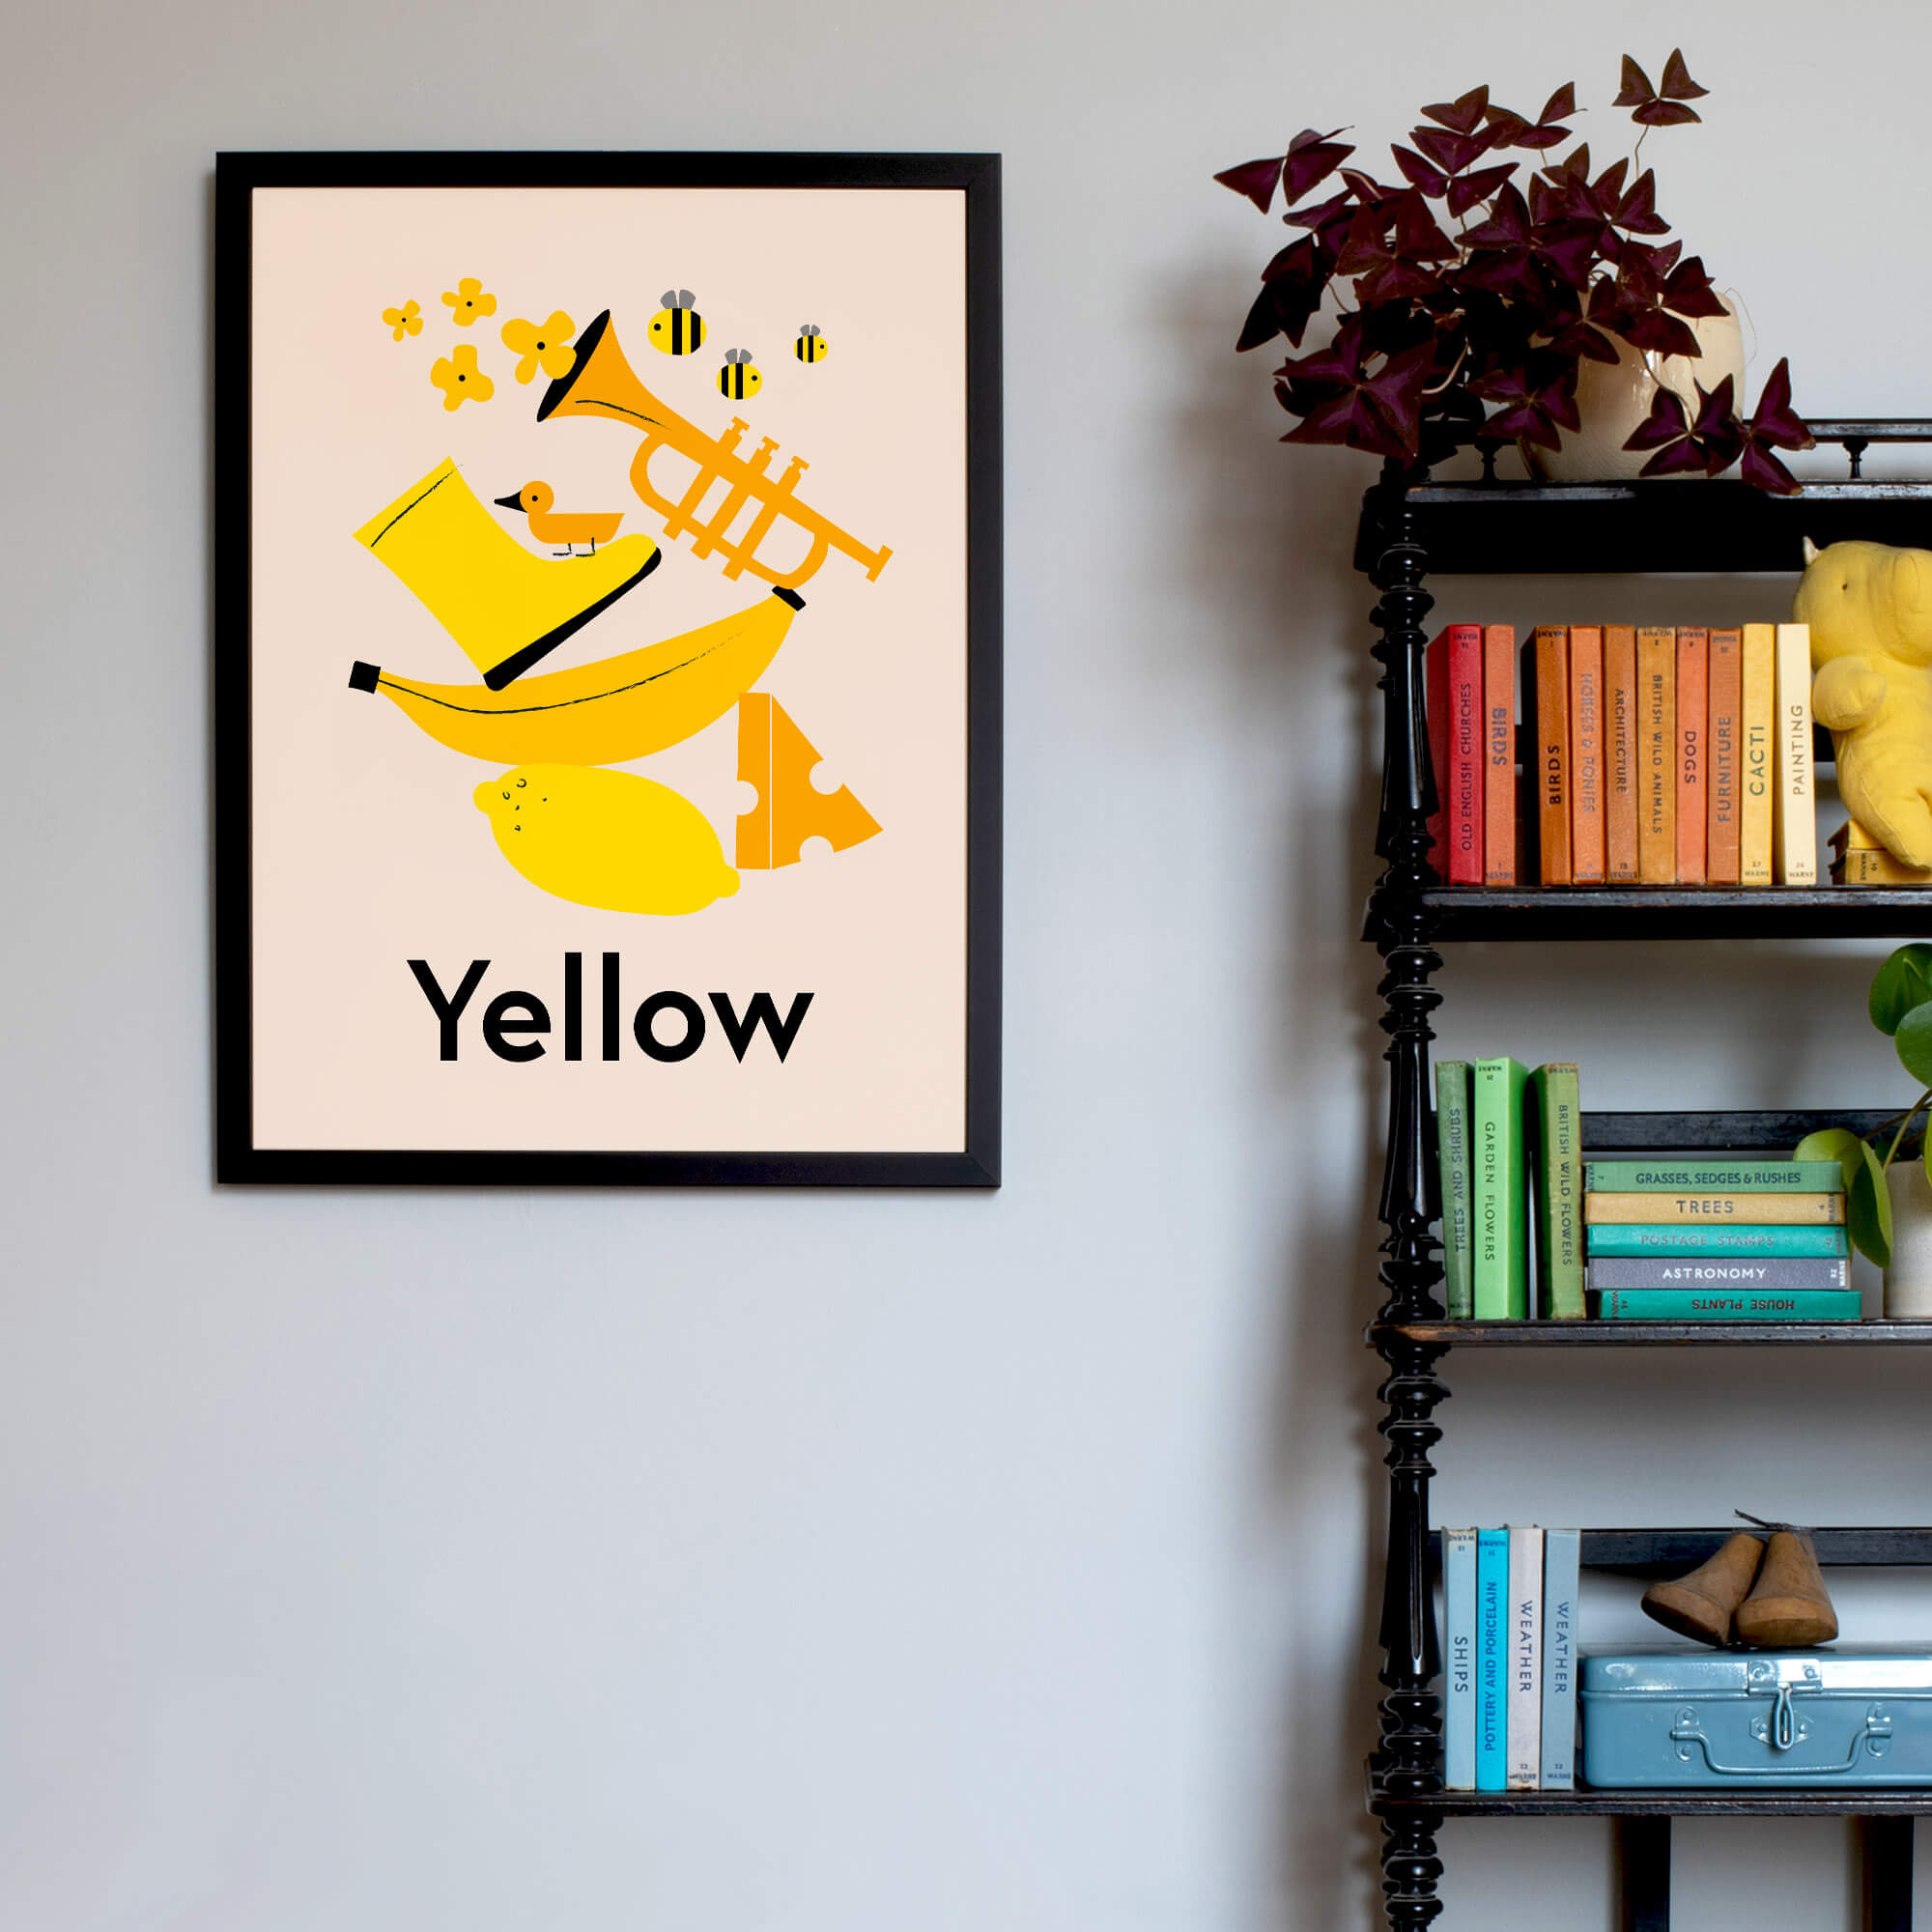 Favourite Colour Yellow Framed Fine Art Print